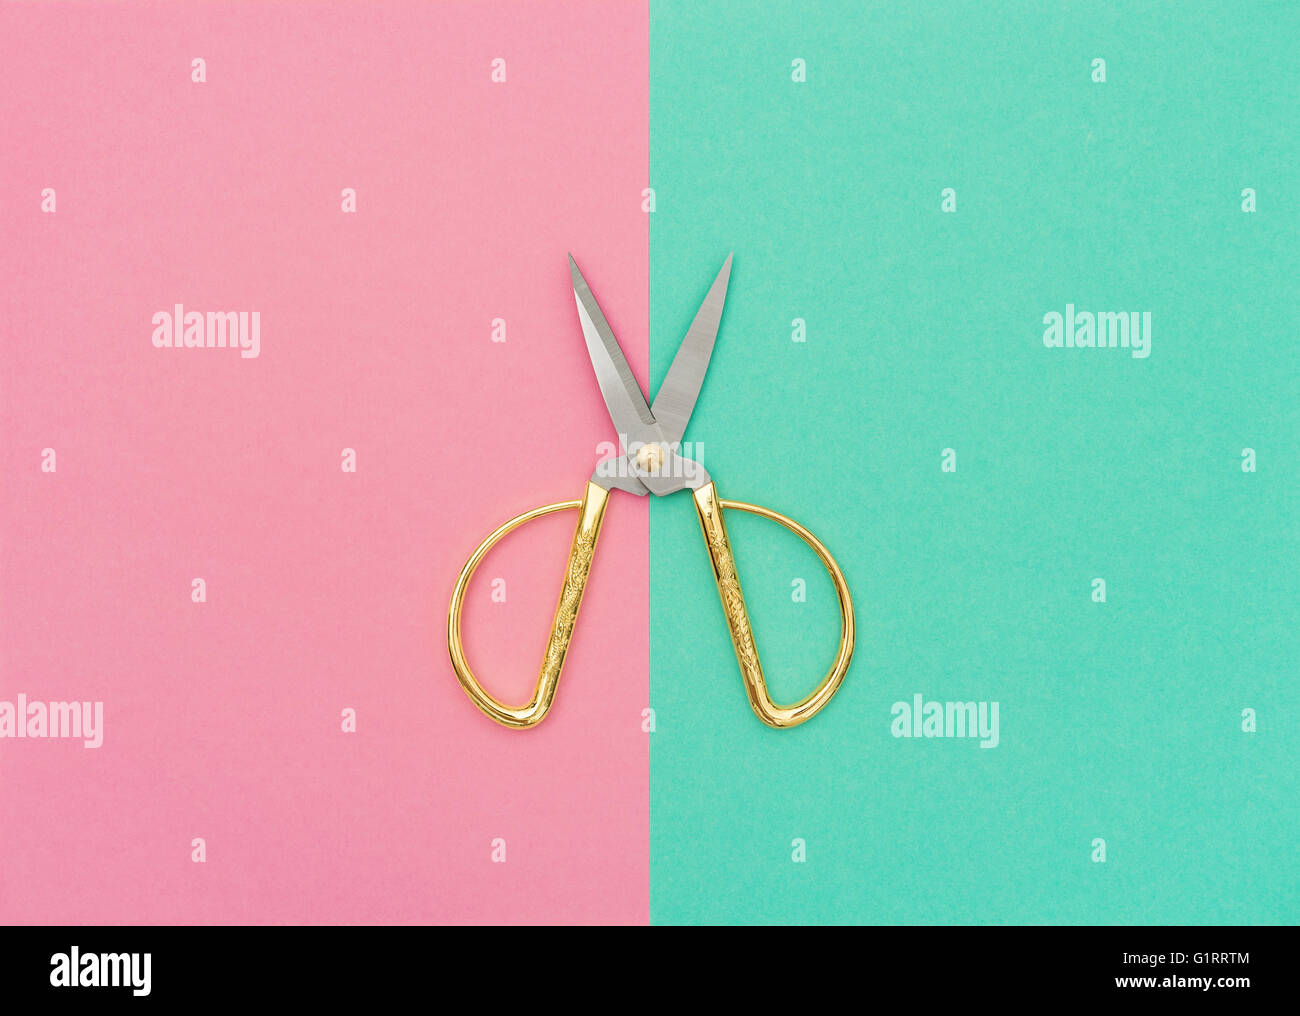 Vintage scissors on color hipster background. Minimal concept Stock Photo